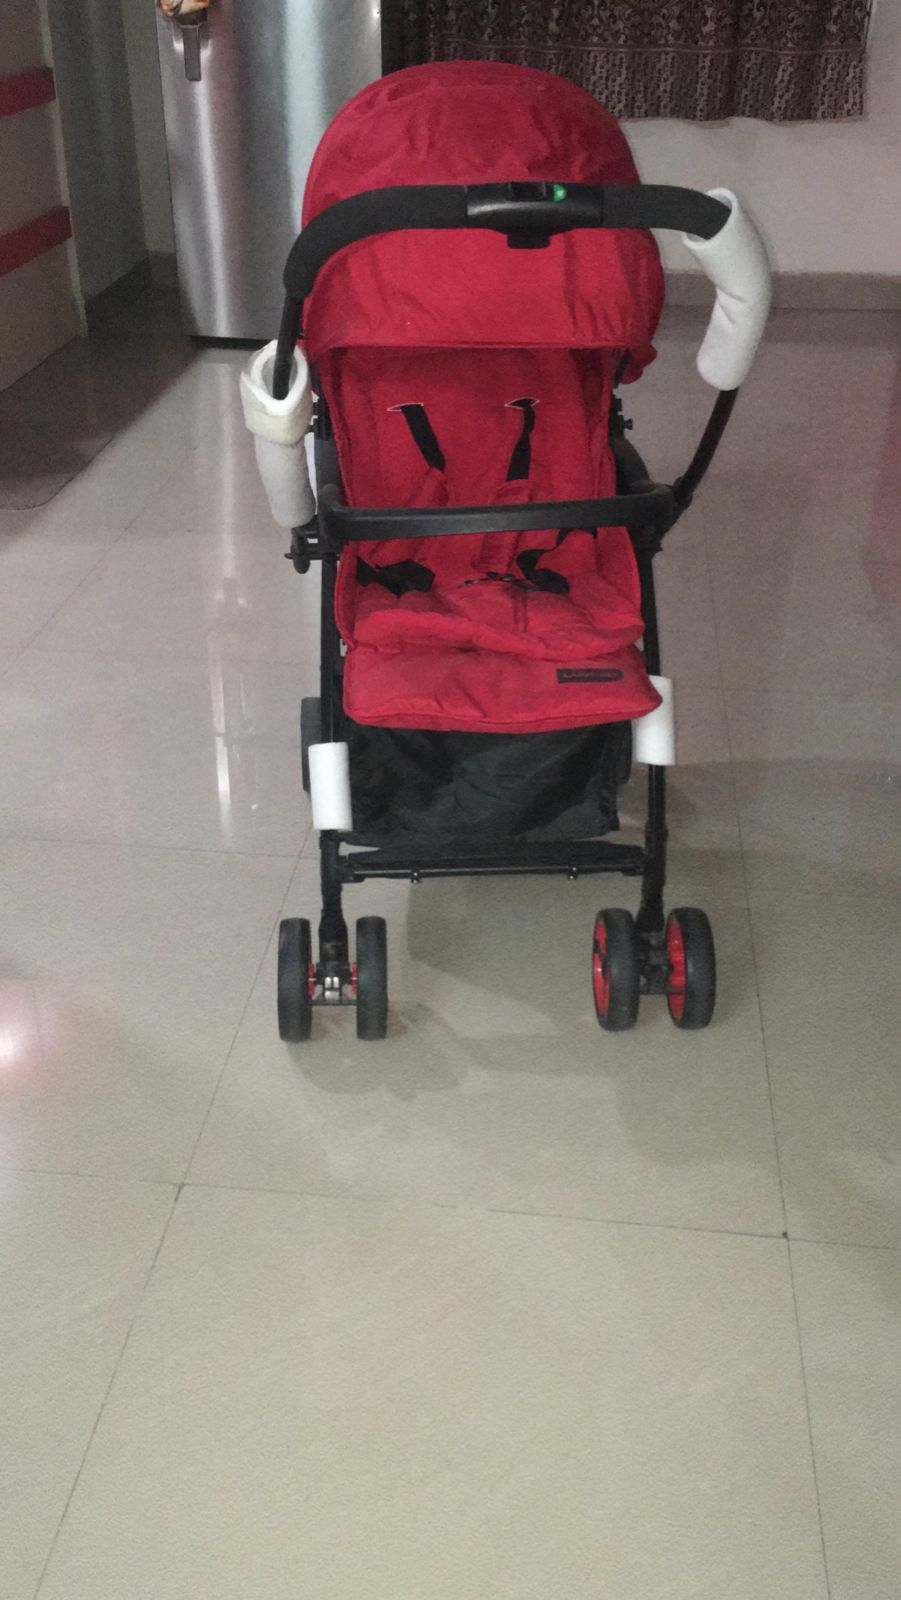 Luv Lap Spark Baby Stroller